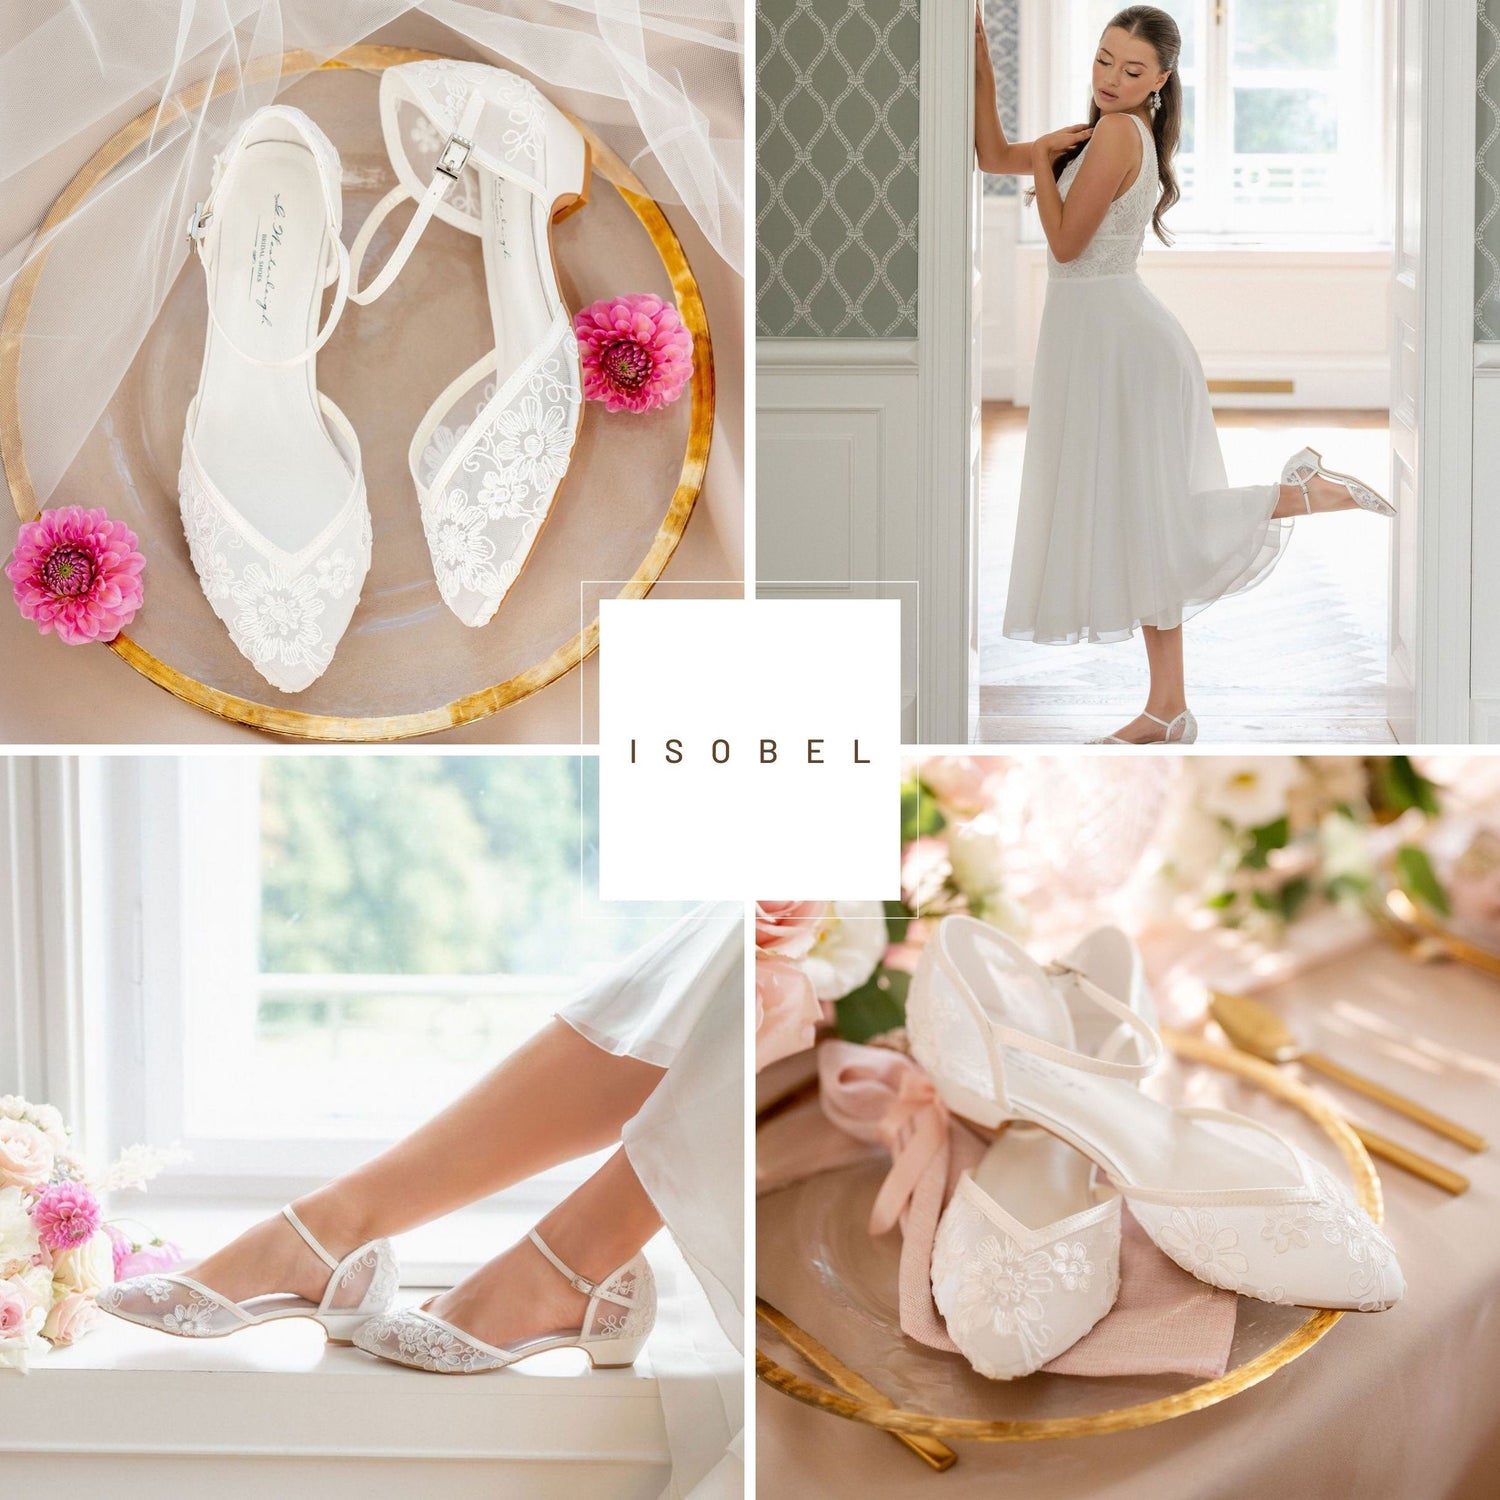 Champagne velvet shoes with soft velvet ties for the romantic bride